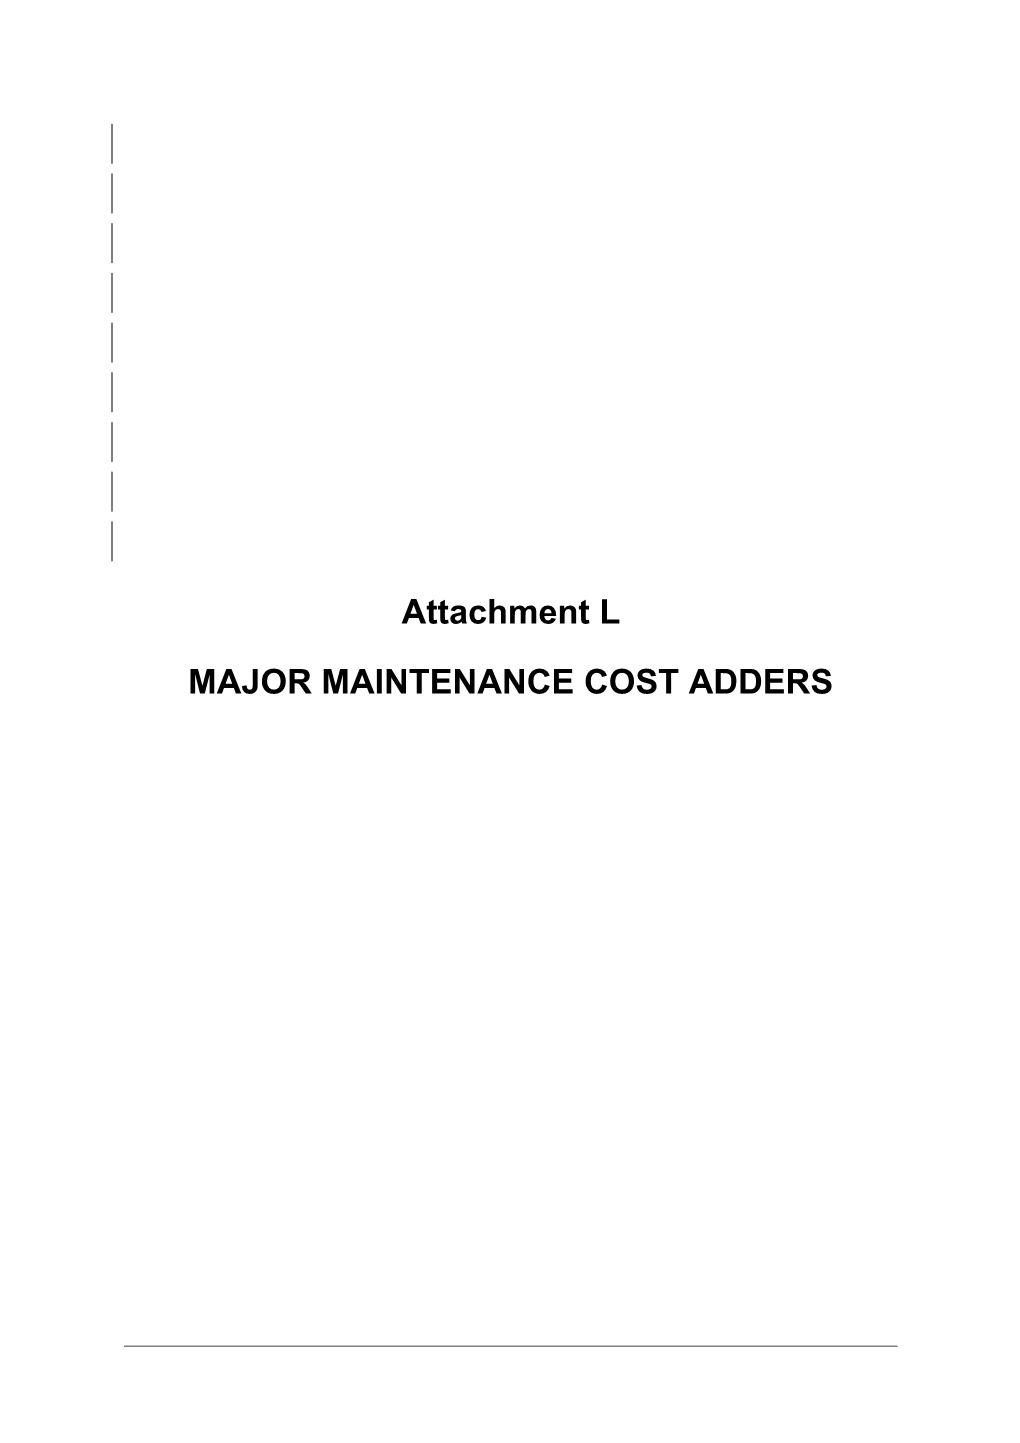 Major Maintenance Cost Adders